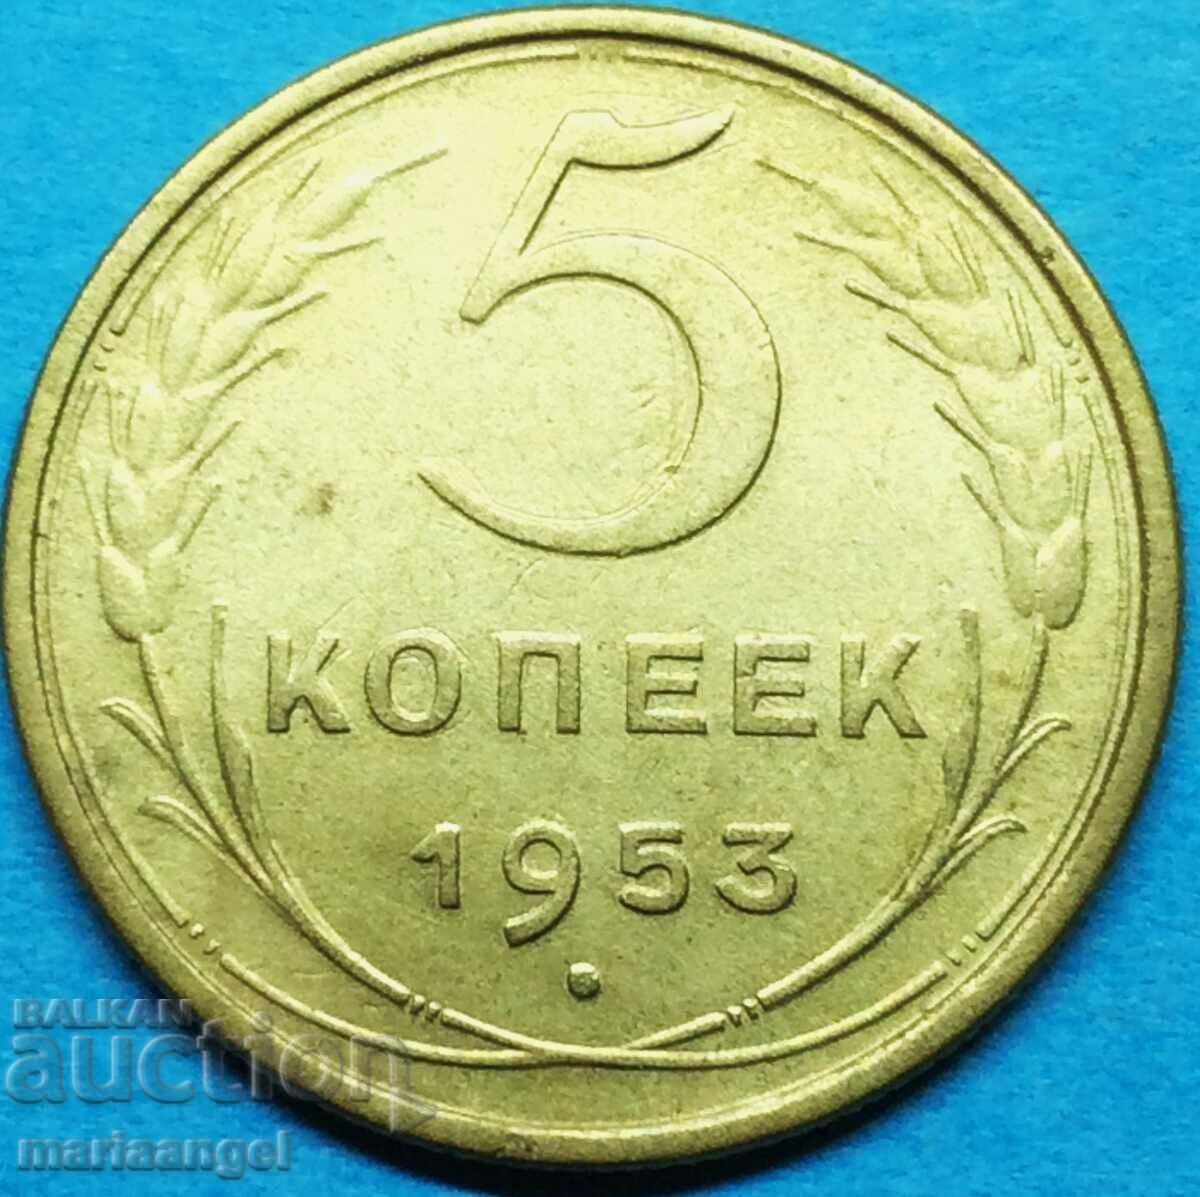 5 kopecks 1953 Russia USSR